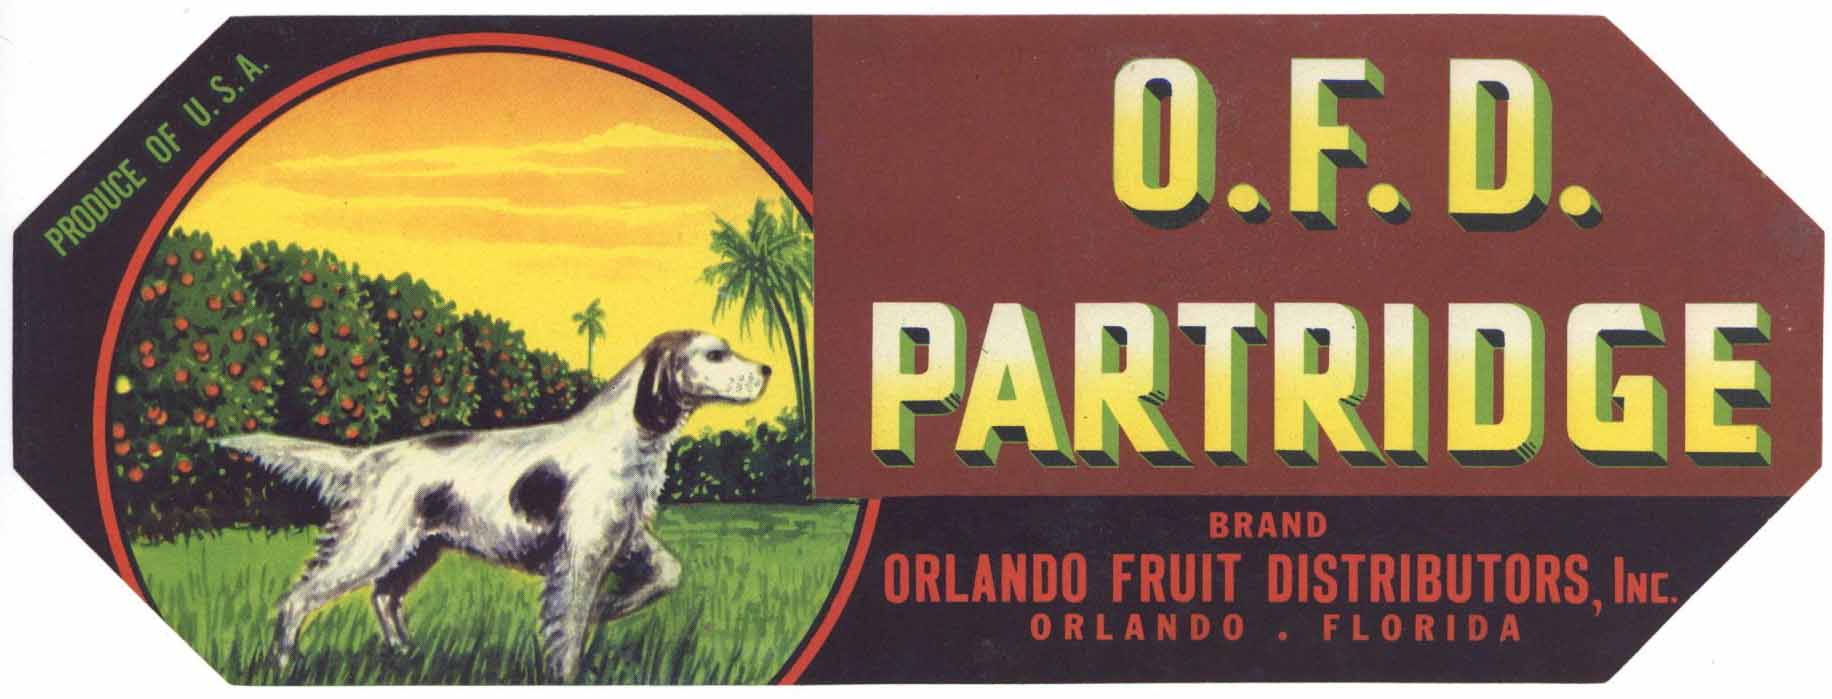 O.F.D. Partridge Brand Vintage Orlando Florida Citrus Crate Label